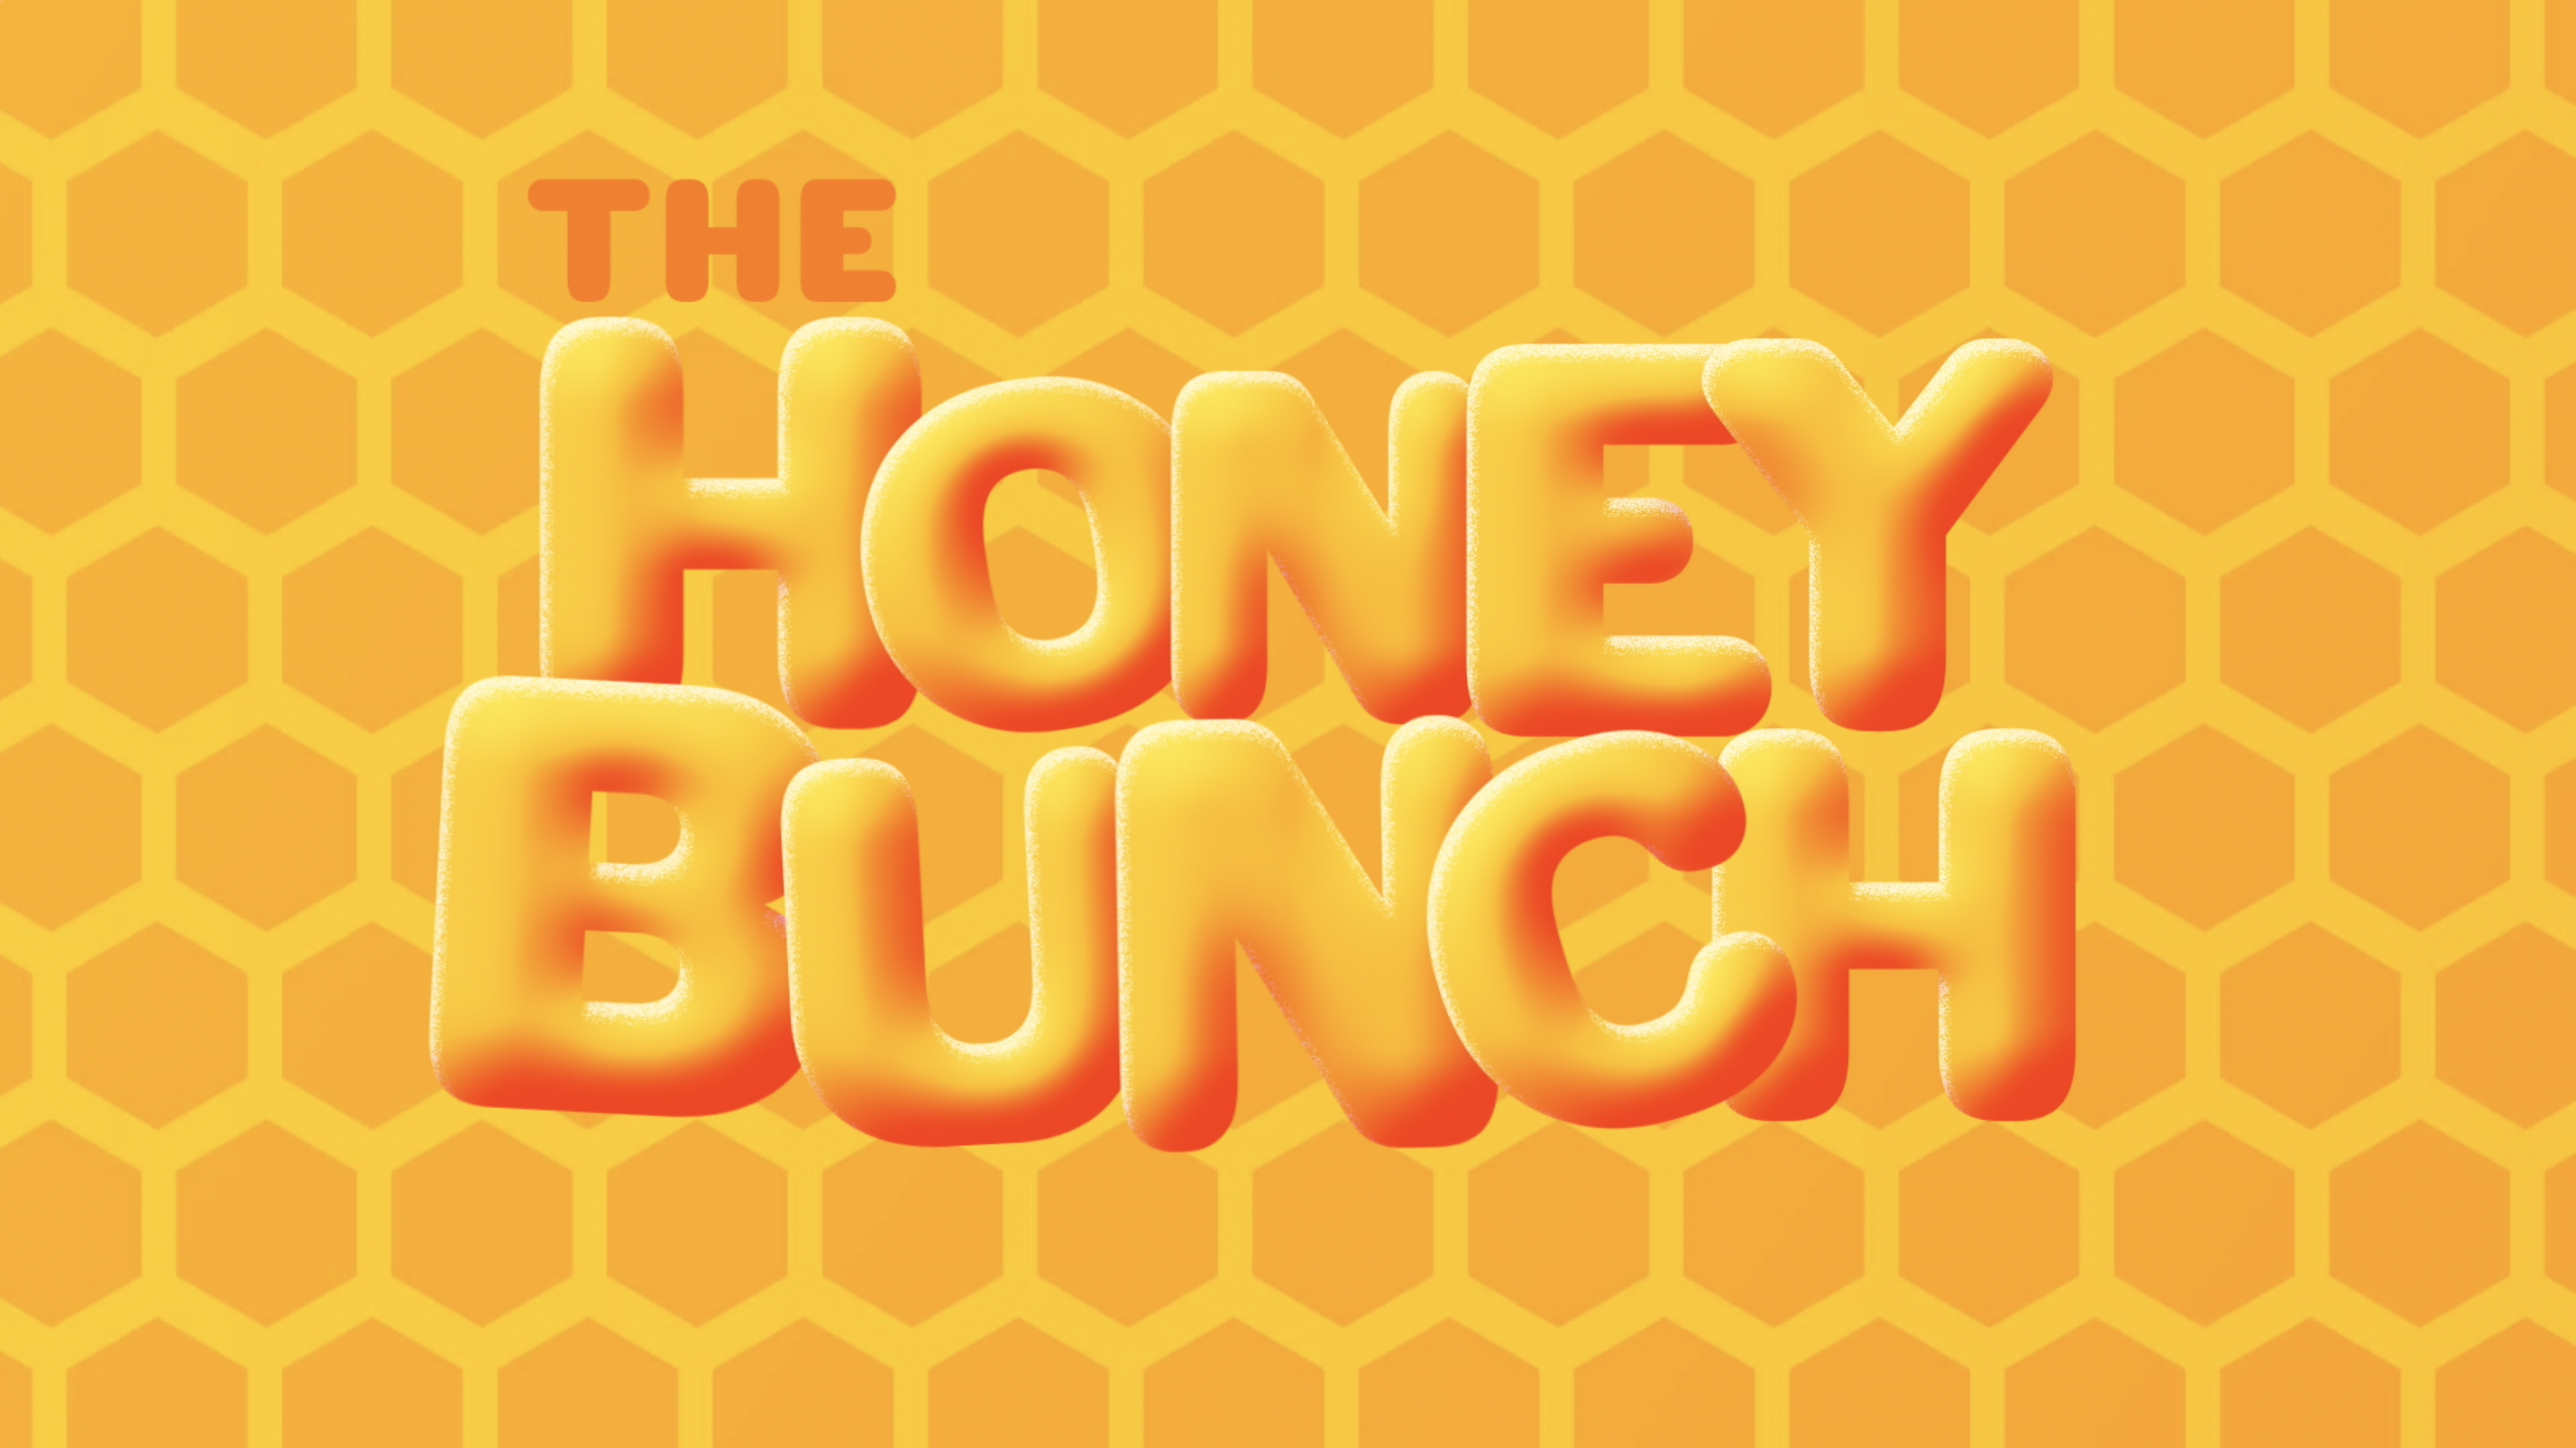 The Honey Bunch